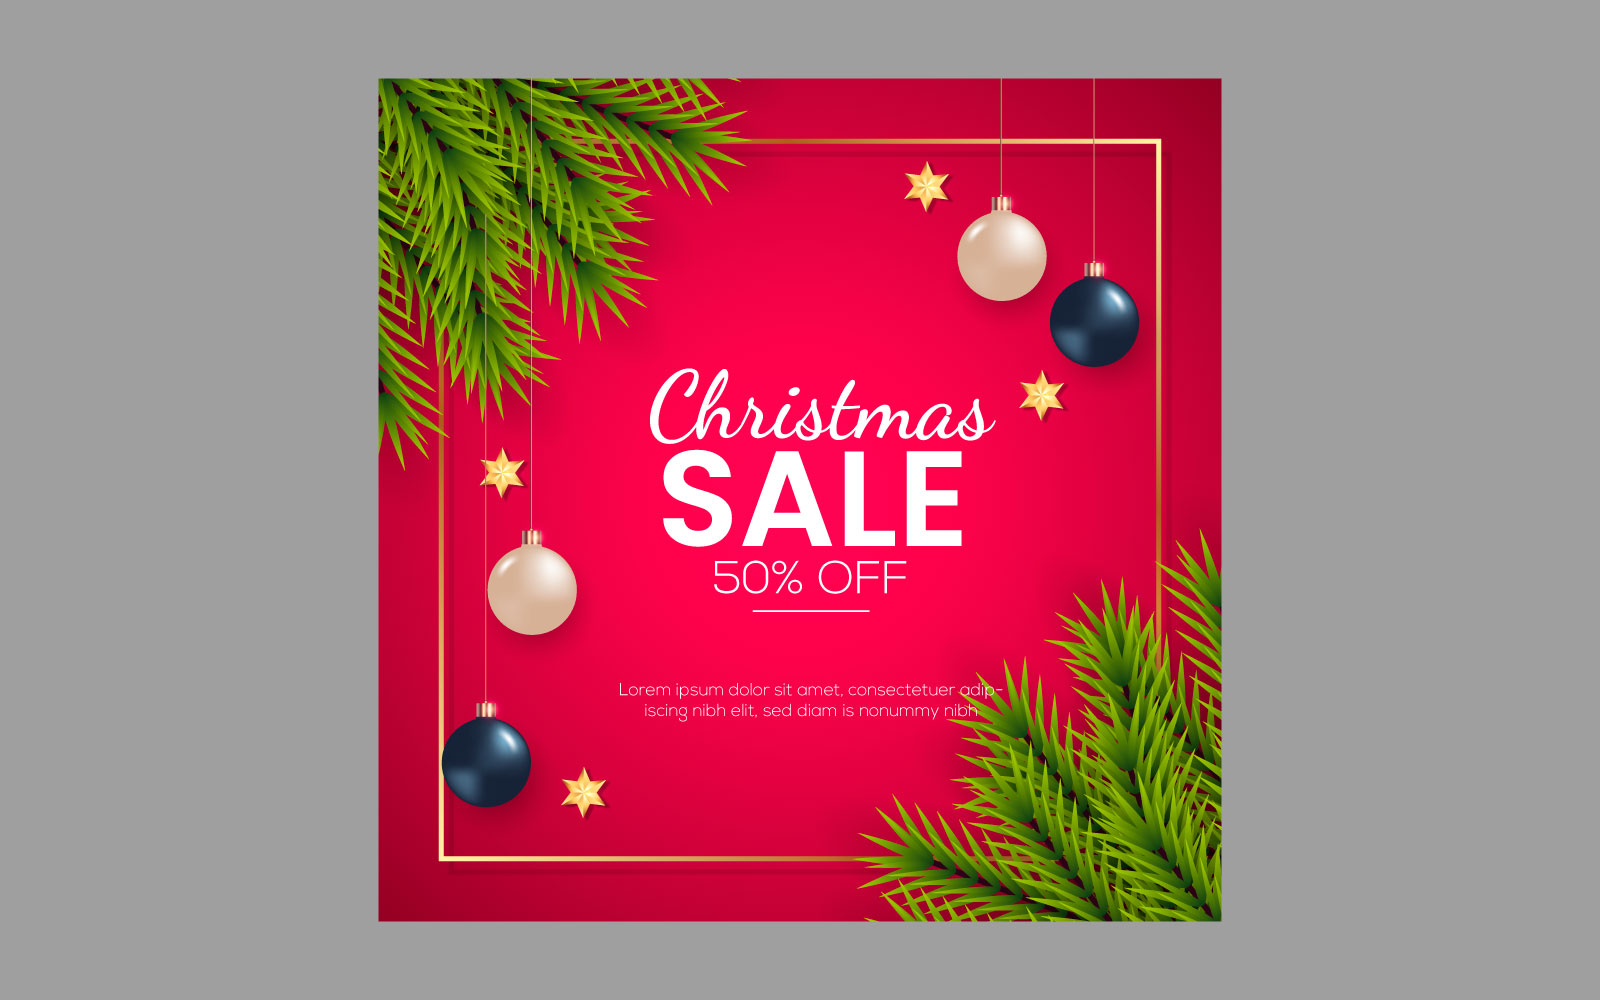 Christmas sale post decoration with christmas ball pine branch and star design